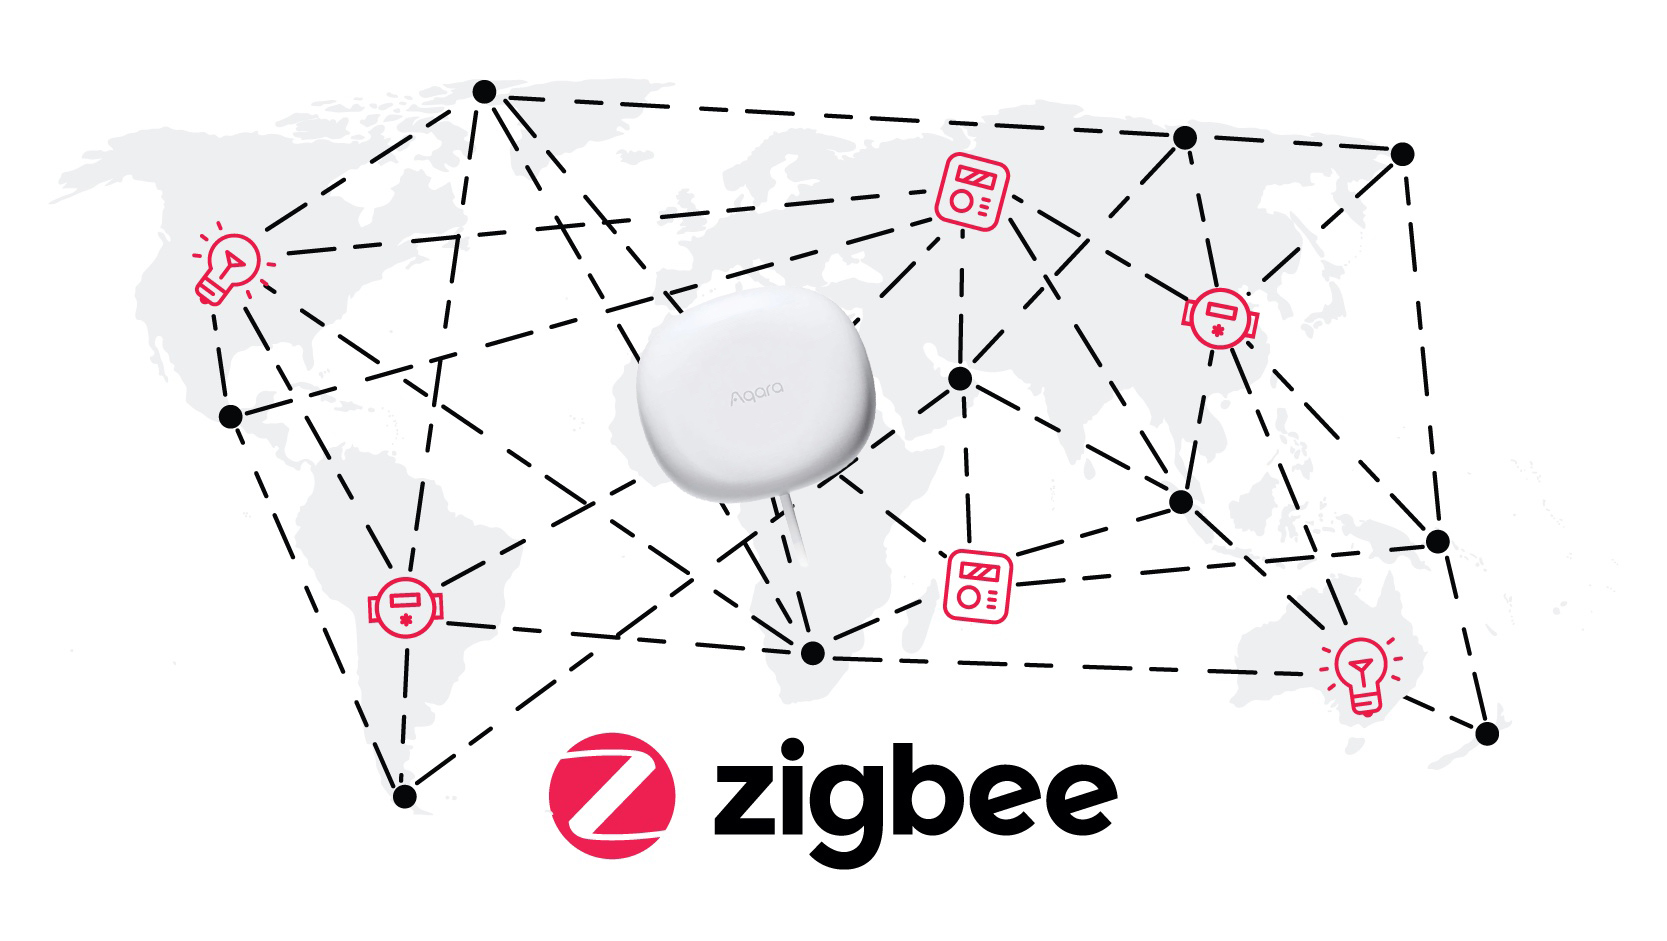 Aqara FP1 is using ZigBee Mesh network for the wireless communication